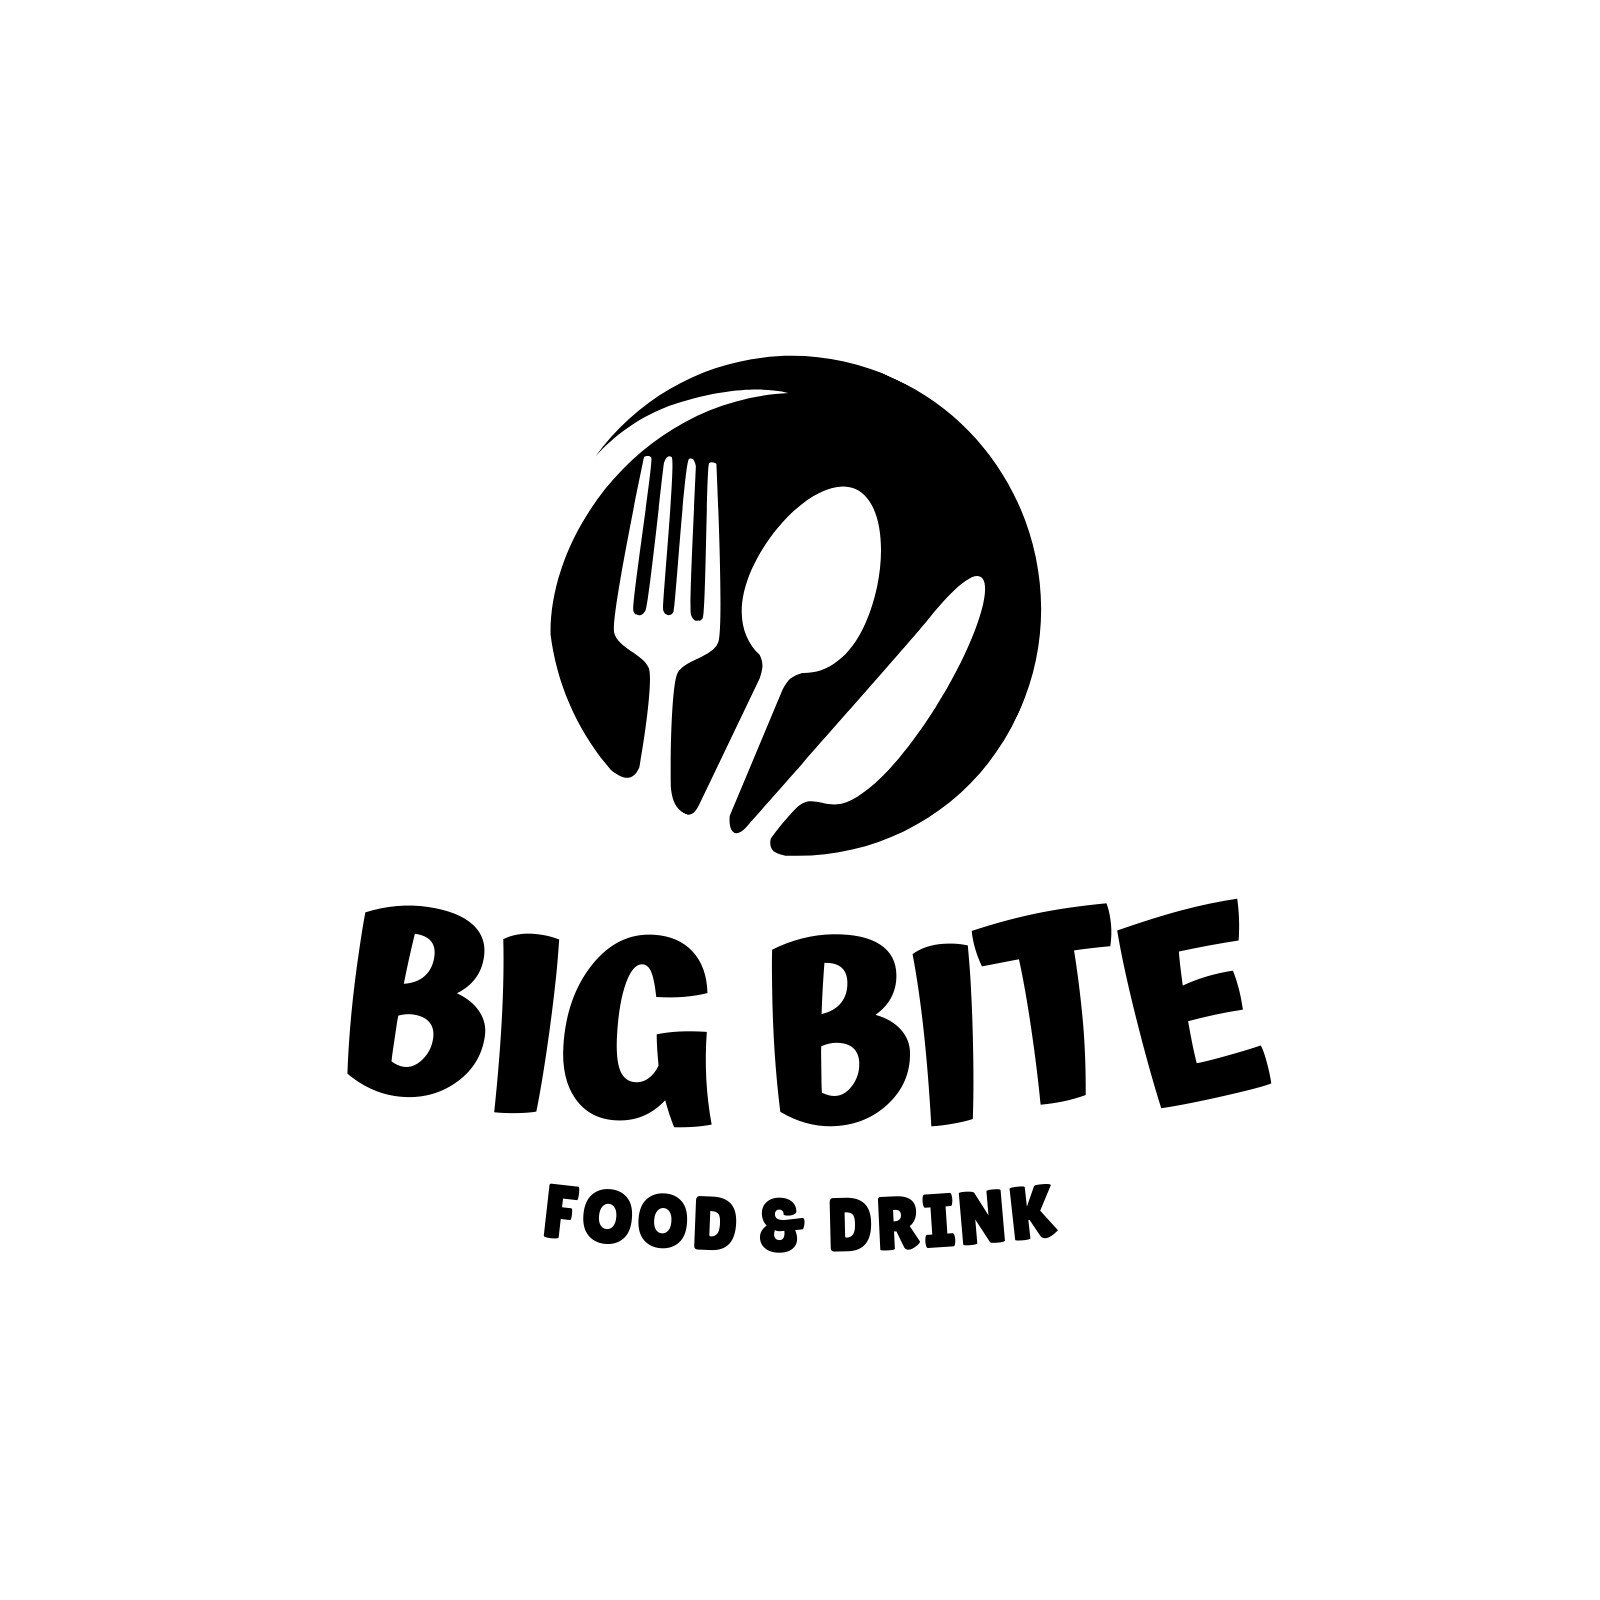 Free And Customizable Food Logo Templates